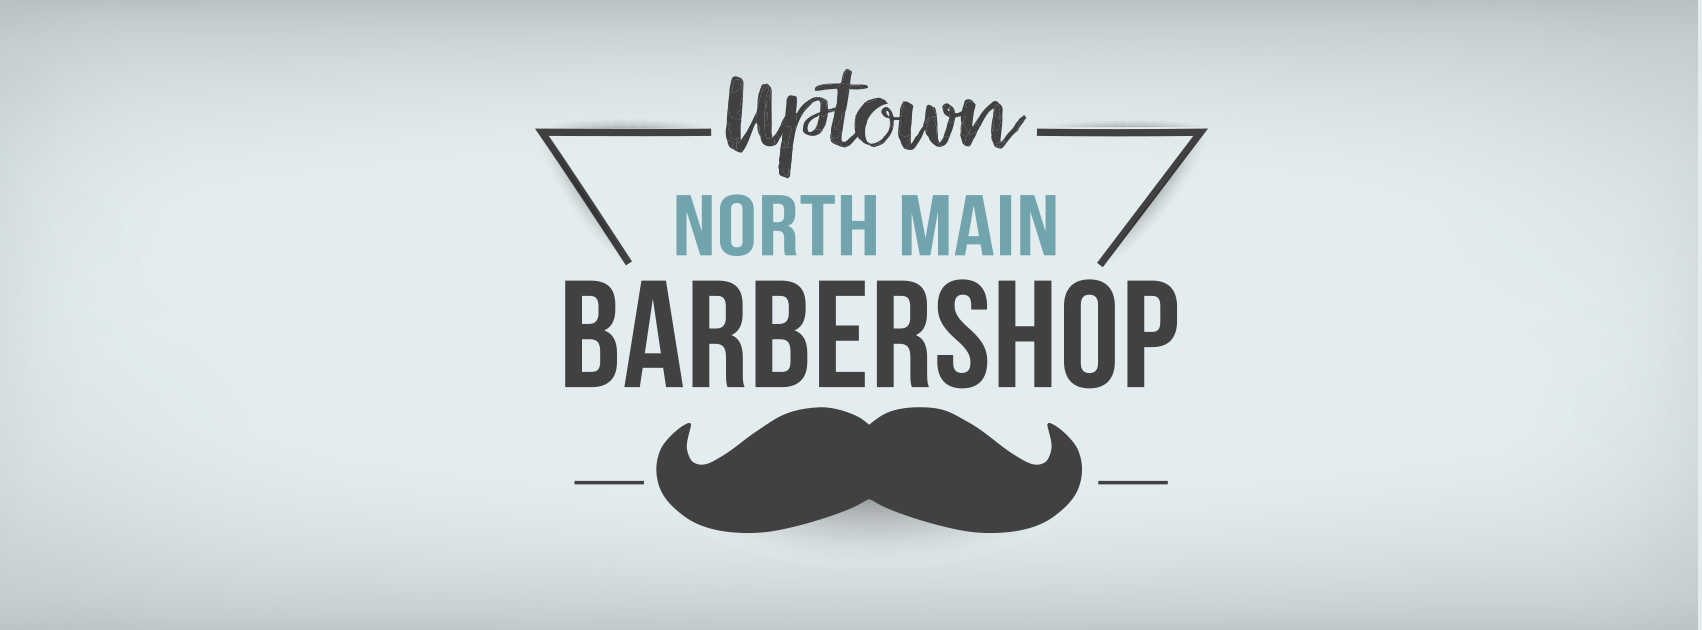 Uptown North Main Barbershop 975 N Main St, Frankenmuth Michigan 48734